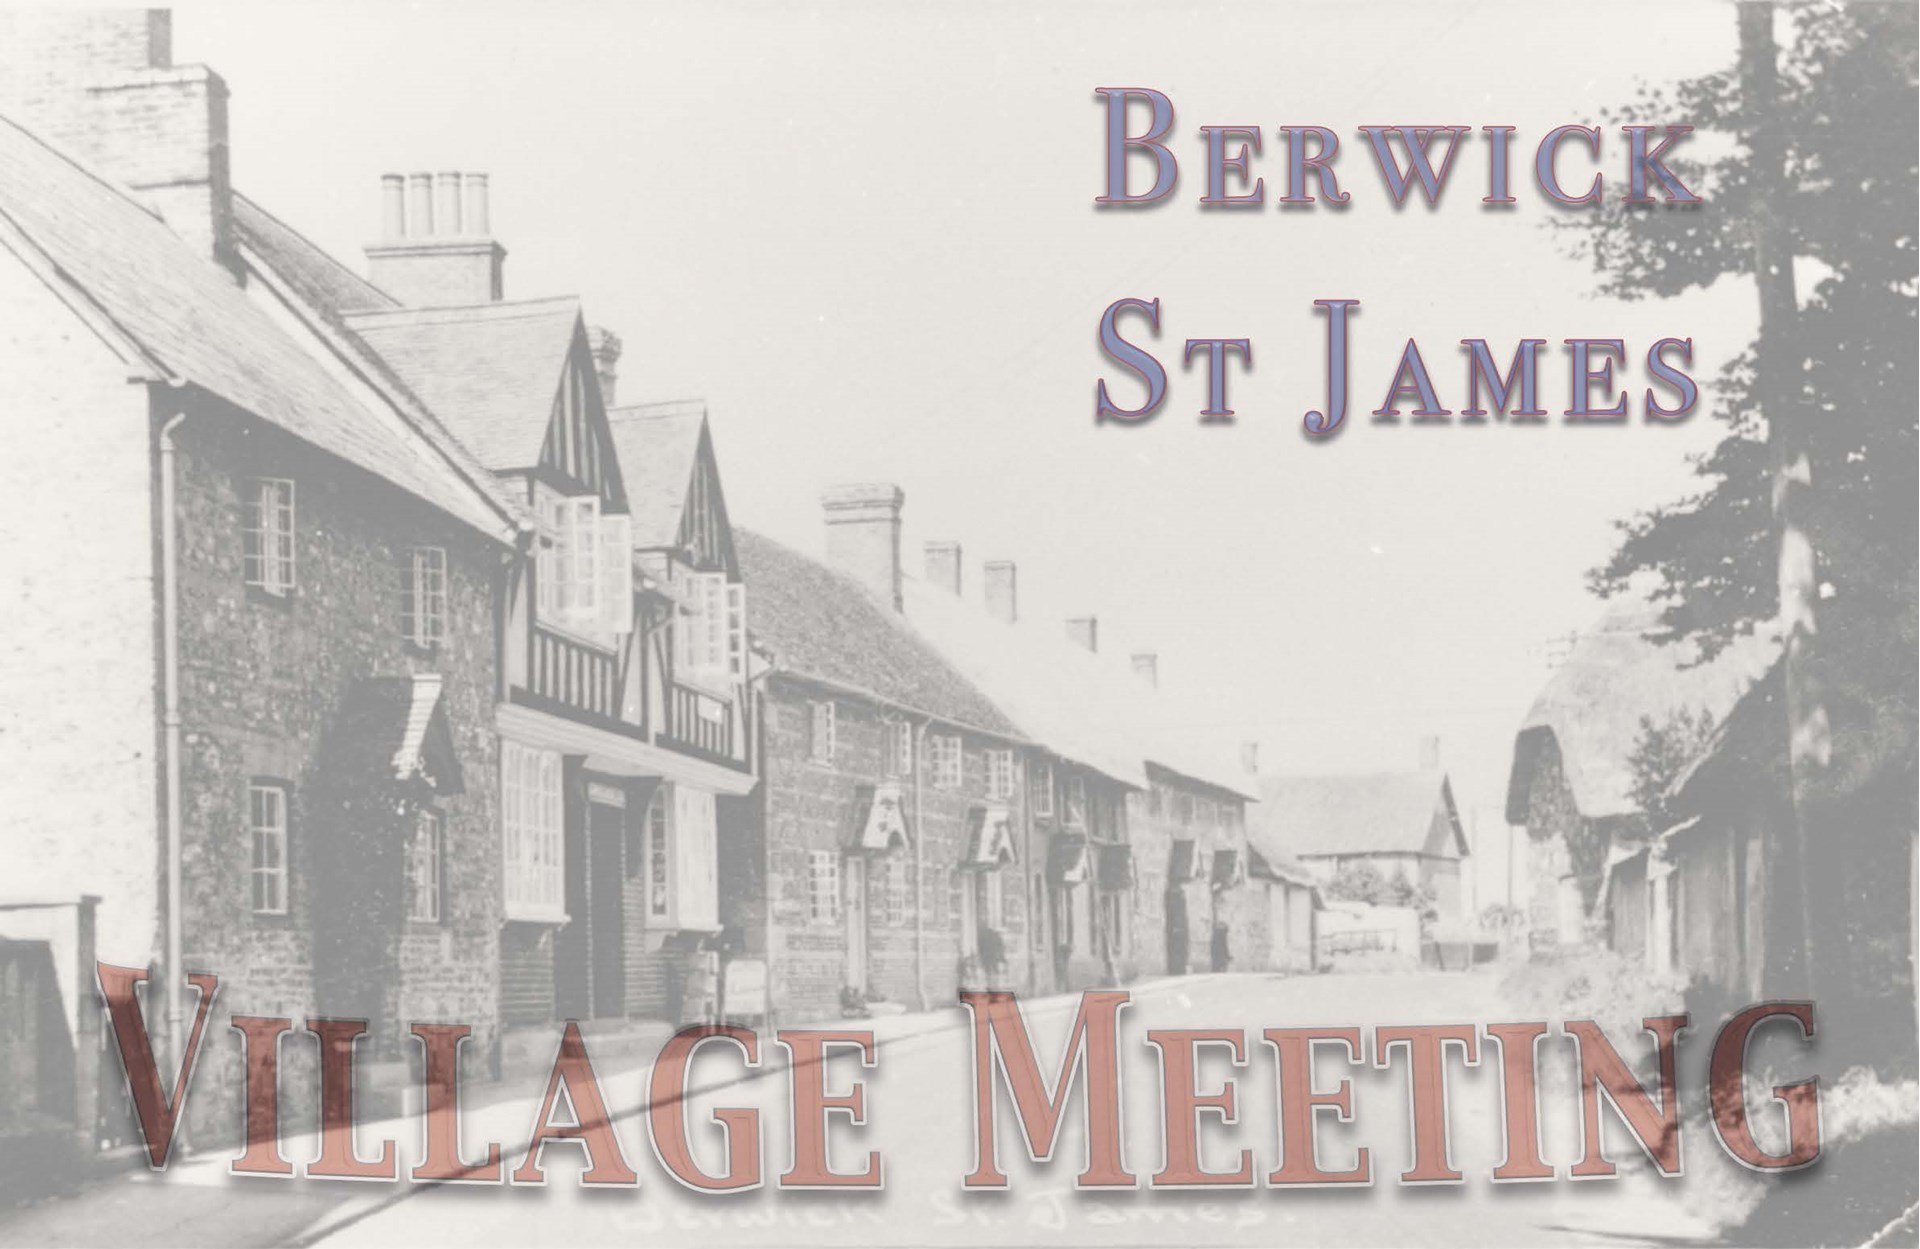 Berwick St James Parish Village Meeting - 7 October '13